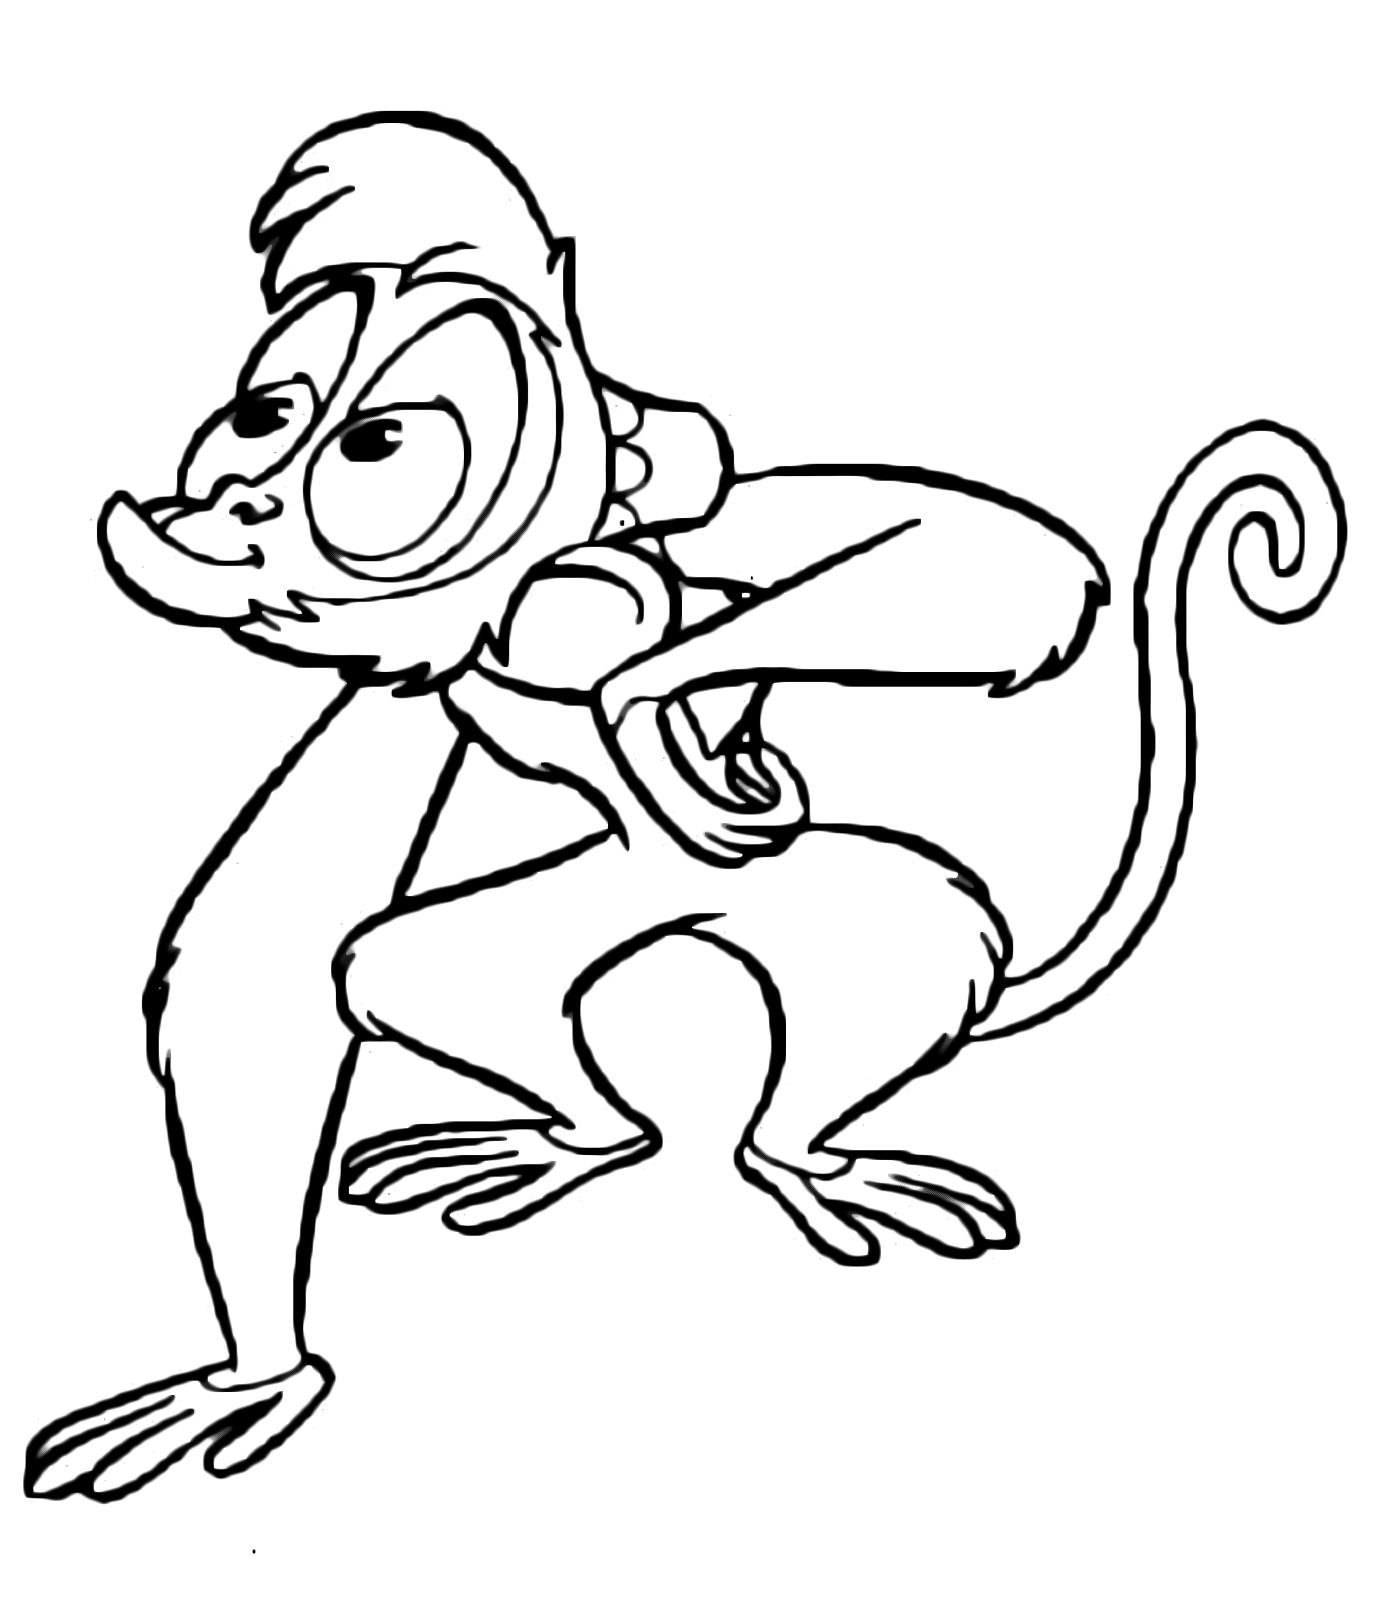 Aladdin - The nice monkey Abu